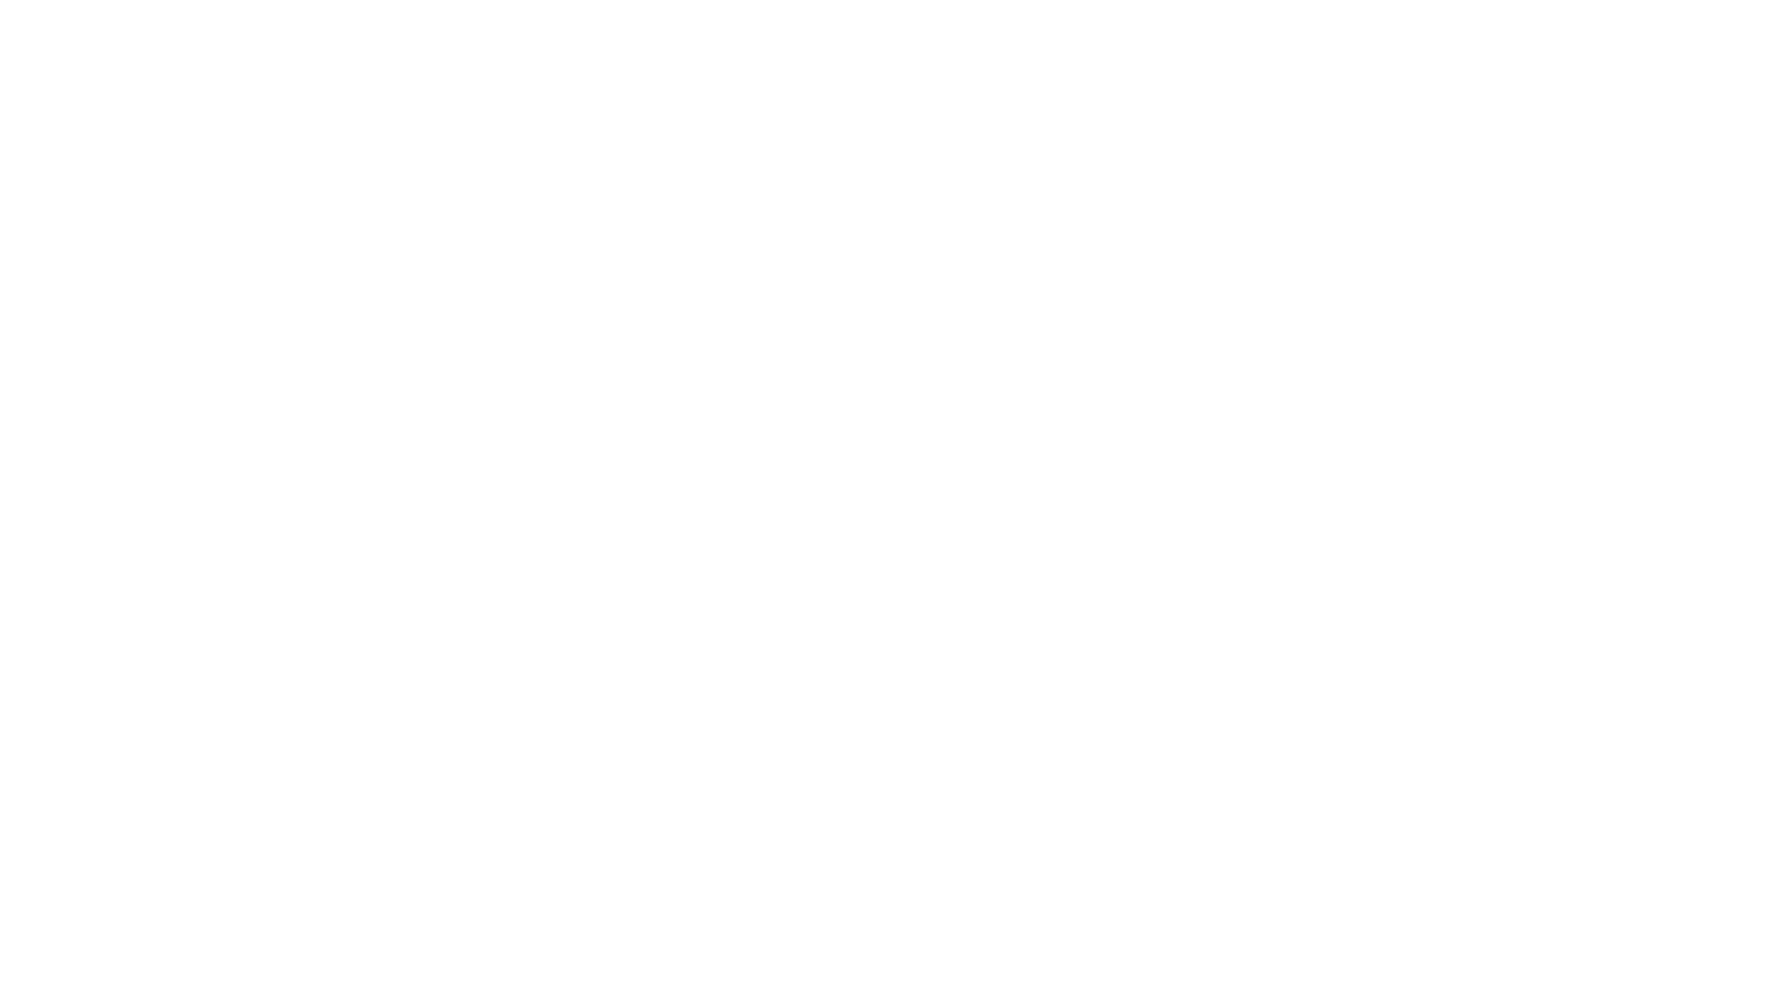 Cerkle - How Work Should Be